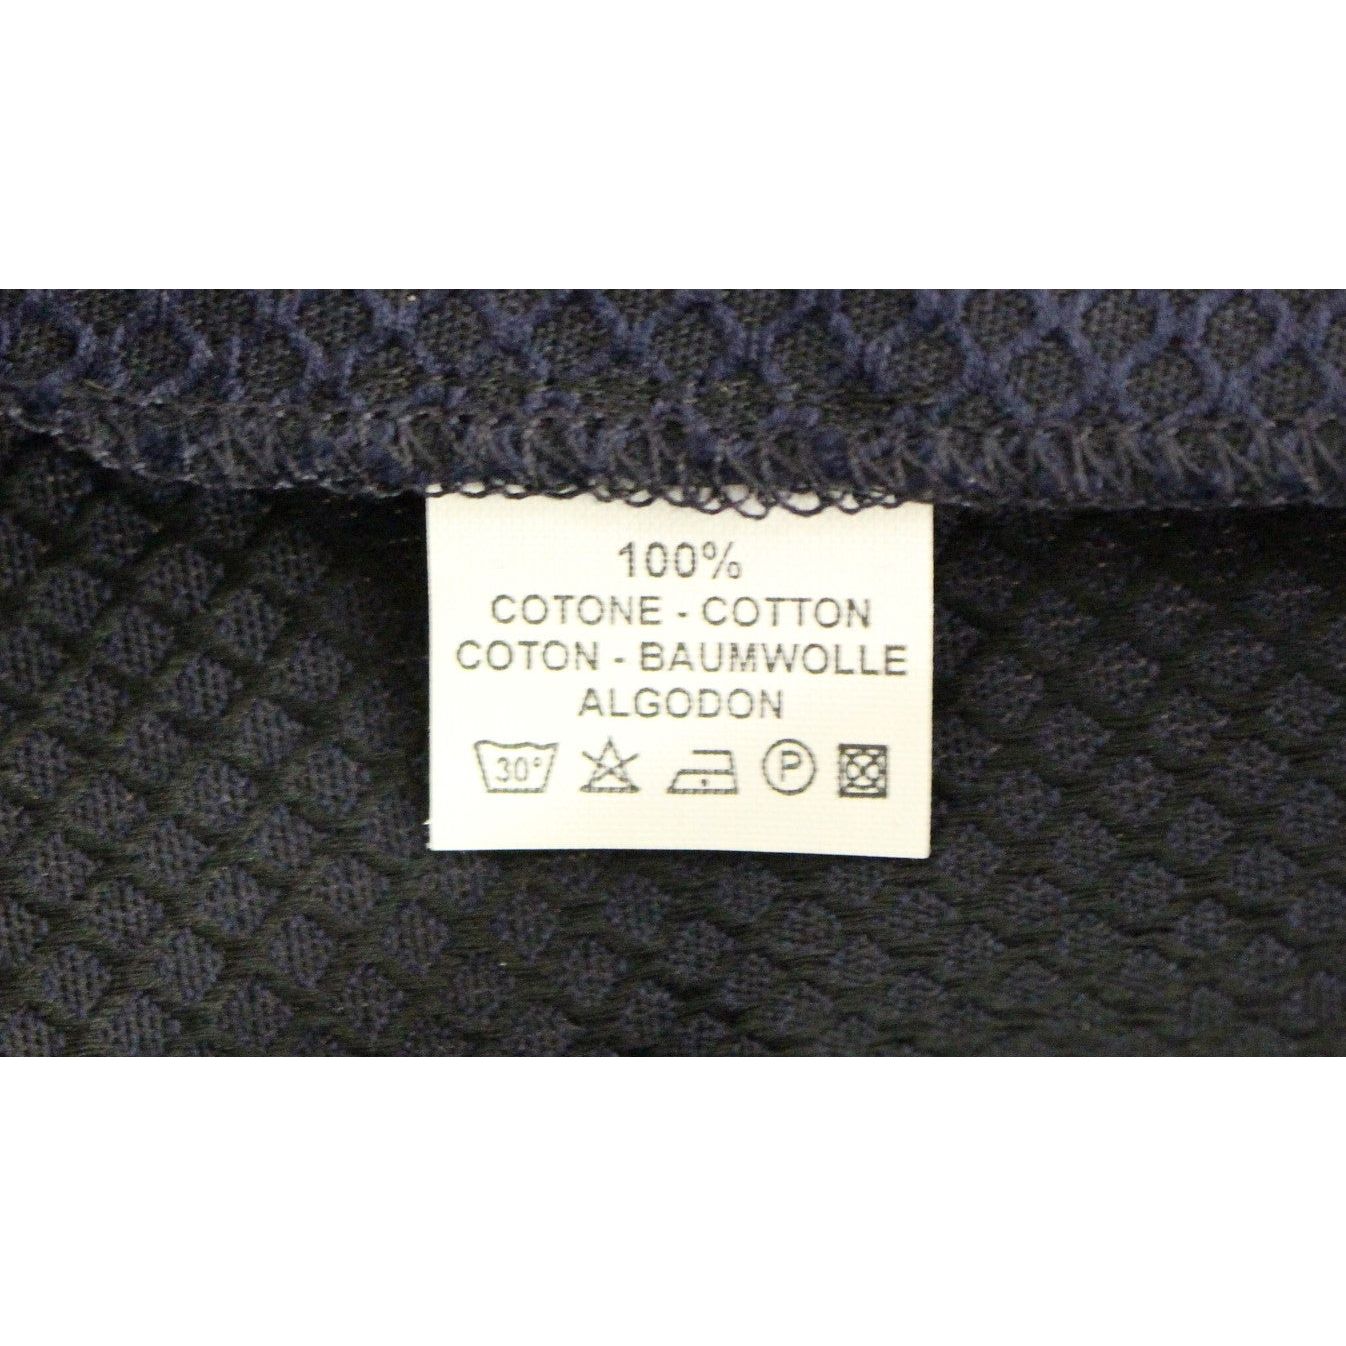 Andrea Incontri | Blue Cropped Cotton Pants | McRichard Designer Brands